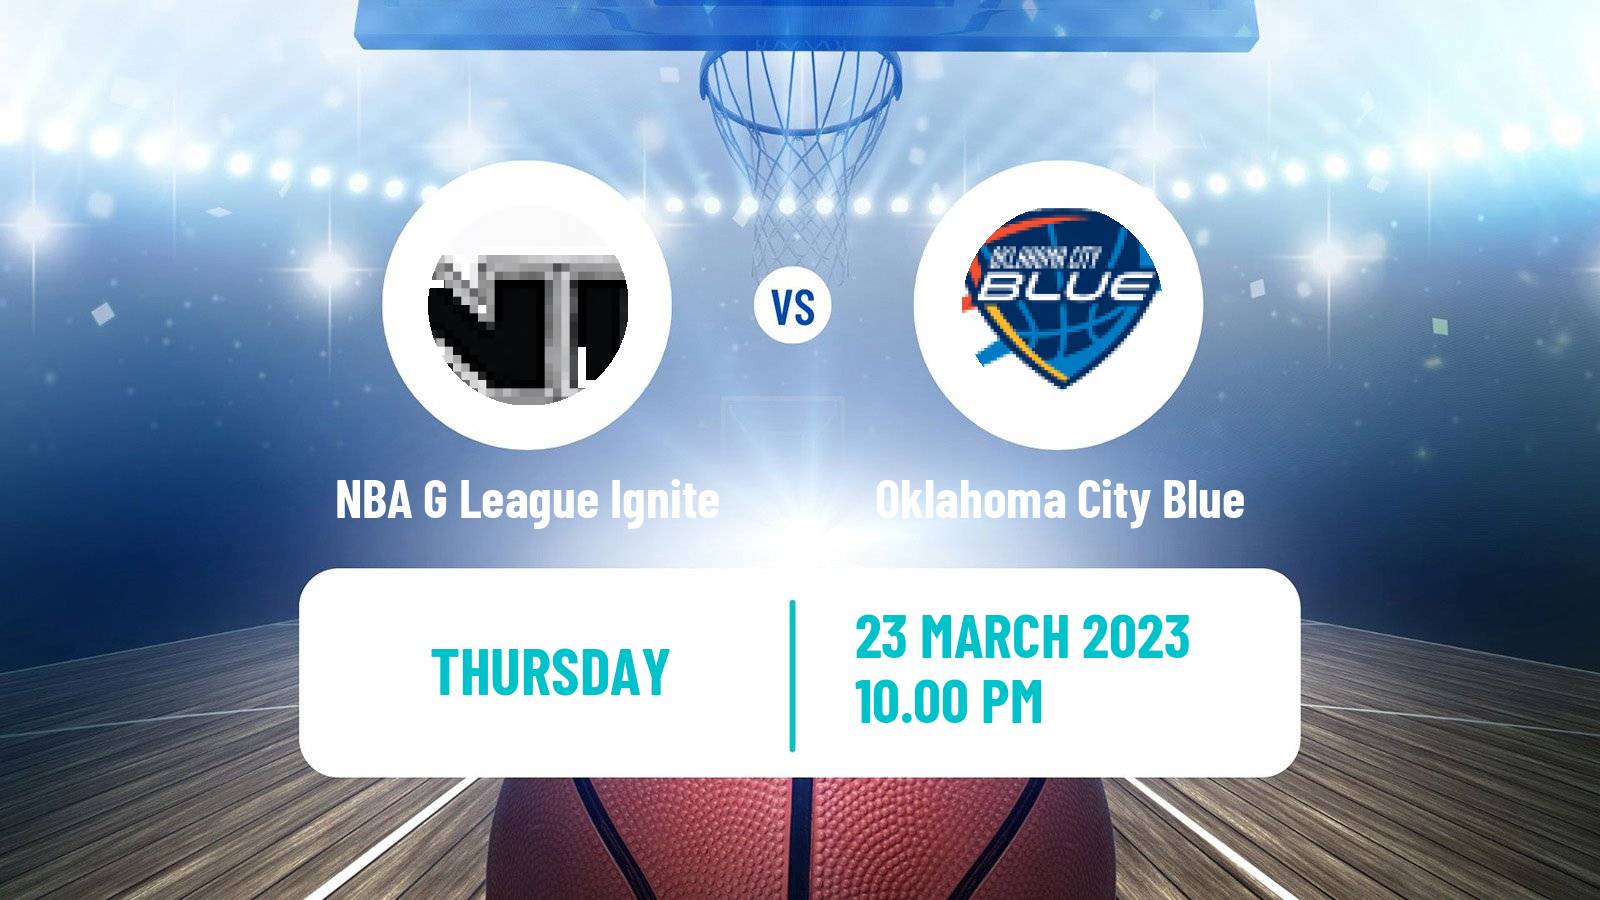 Basketball NBA G-League NBA G League Ignite - Oklahoma City Blue